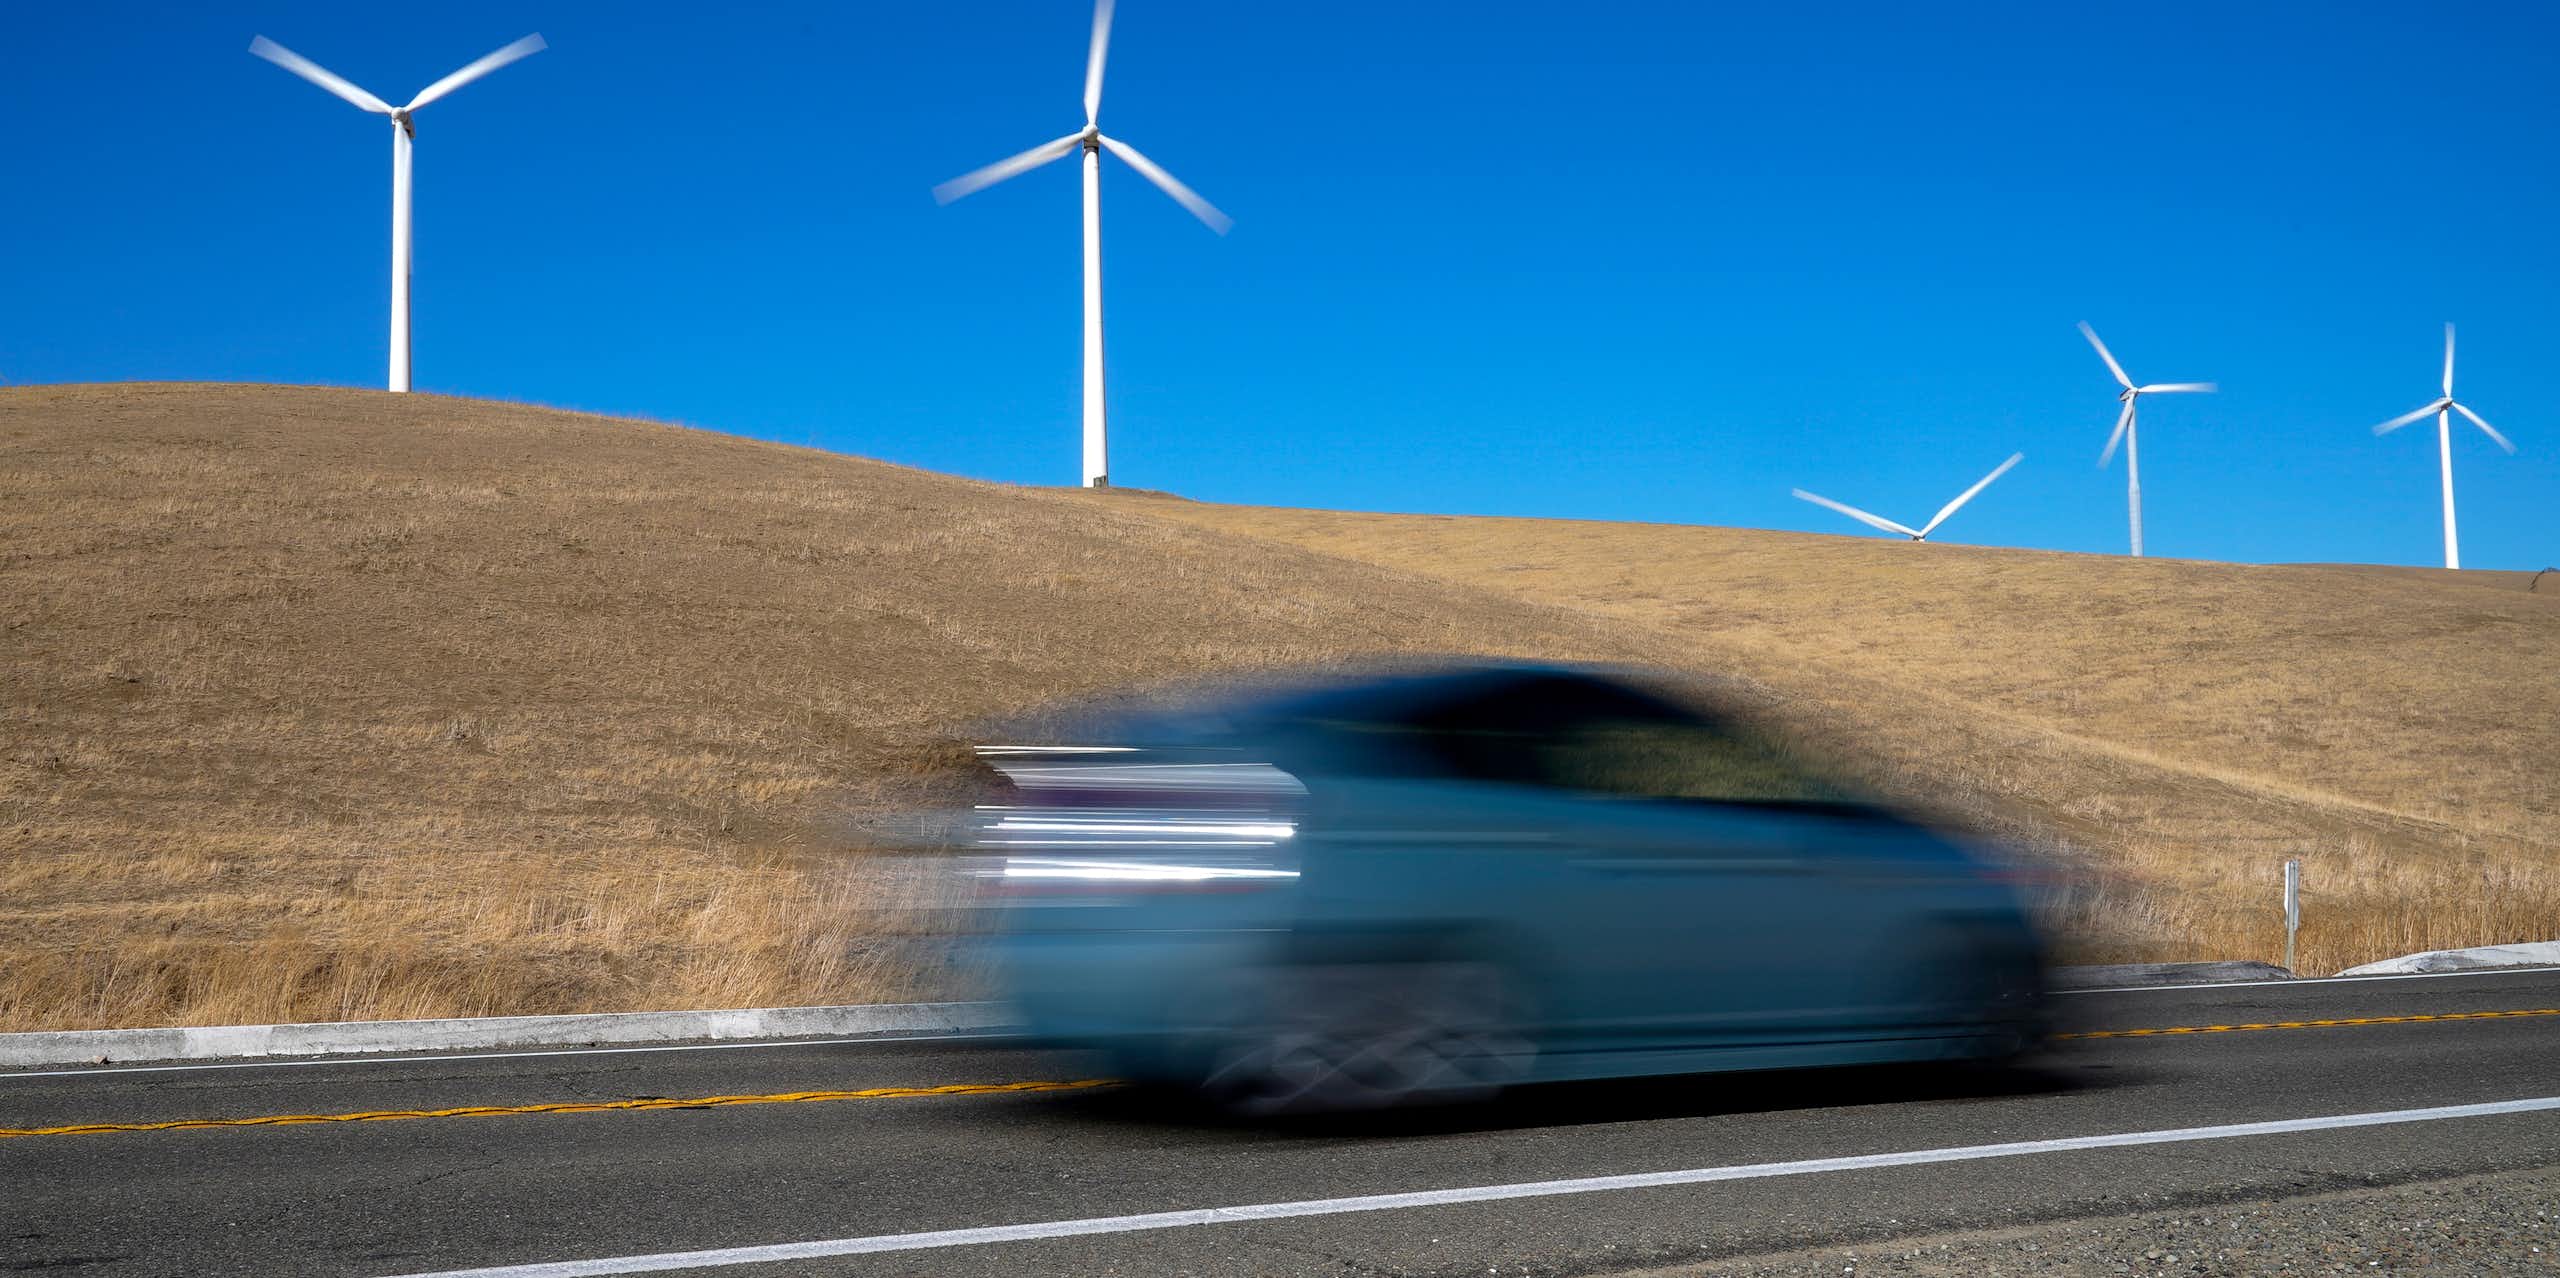 A blurred vehicle races past wind turbines.